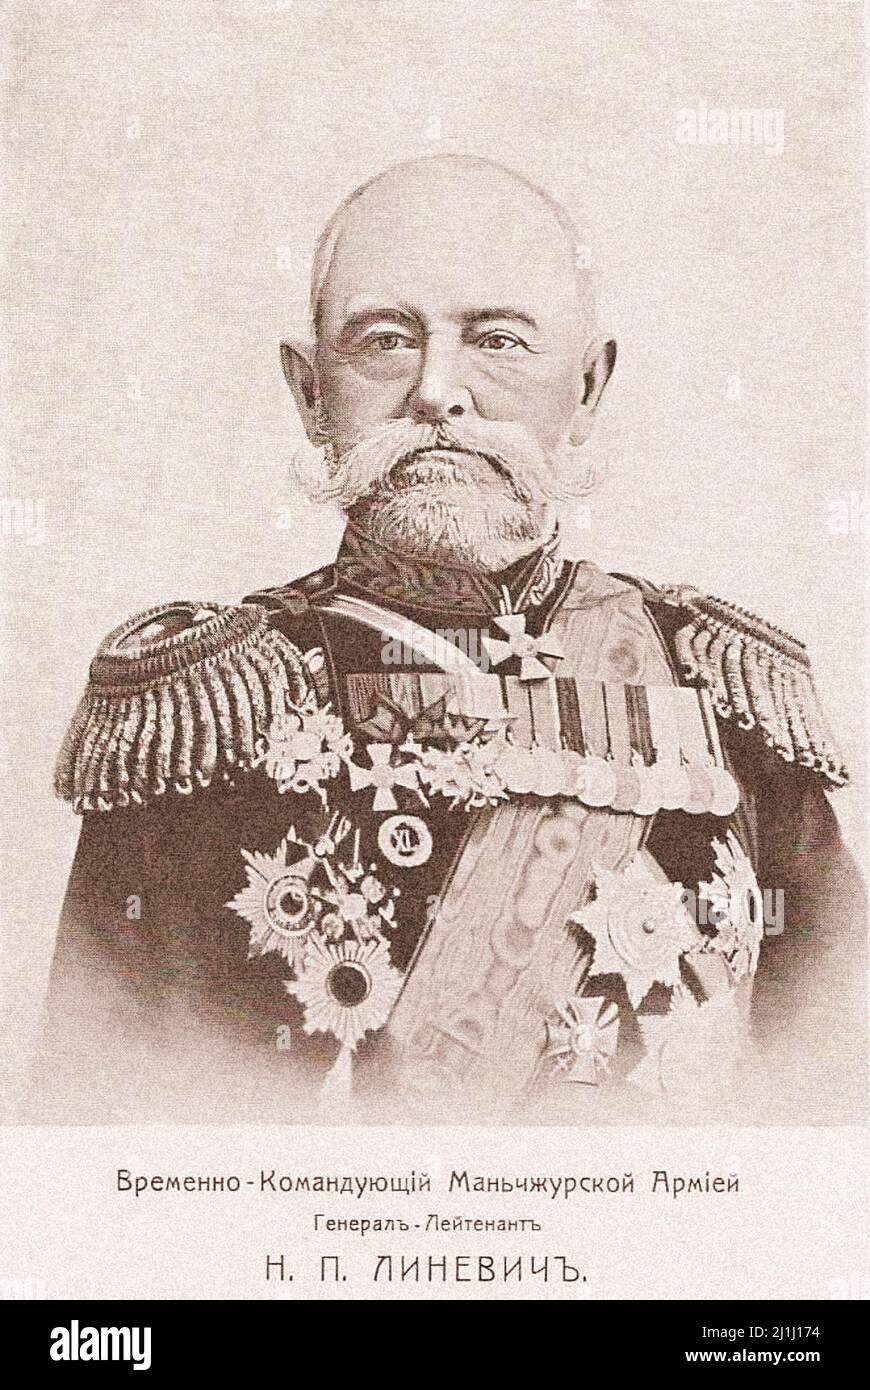 Nikolai Petrovich Okhotnikov |